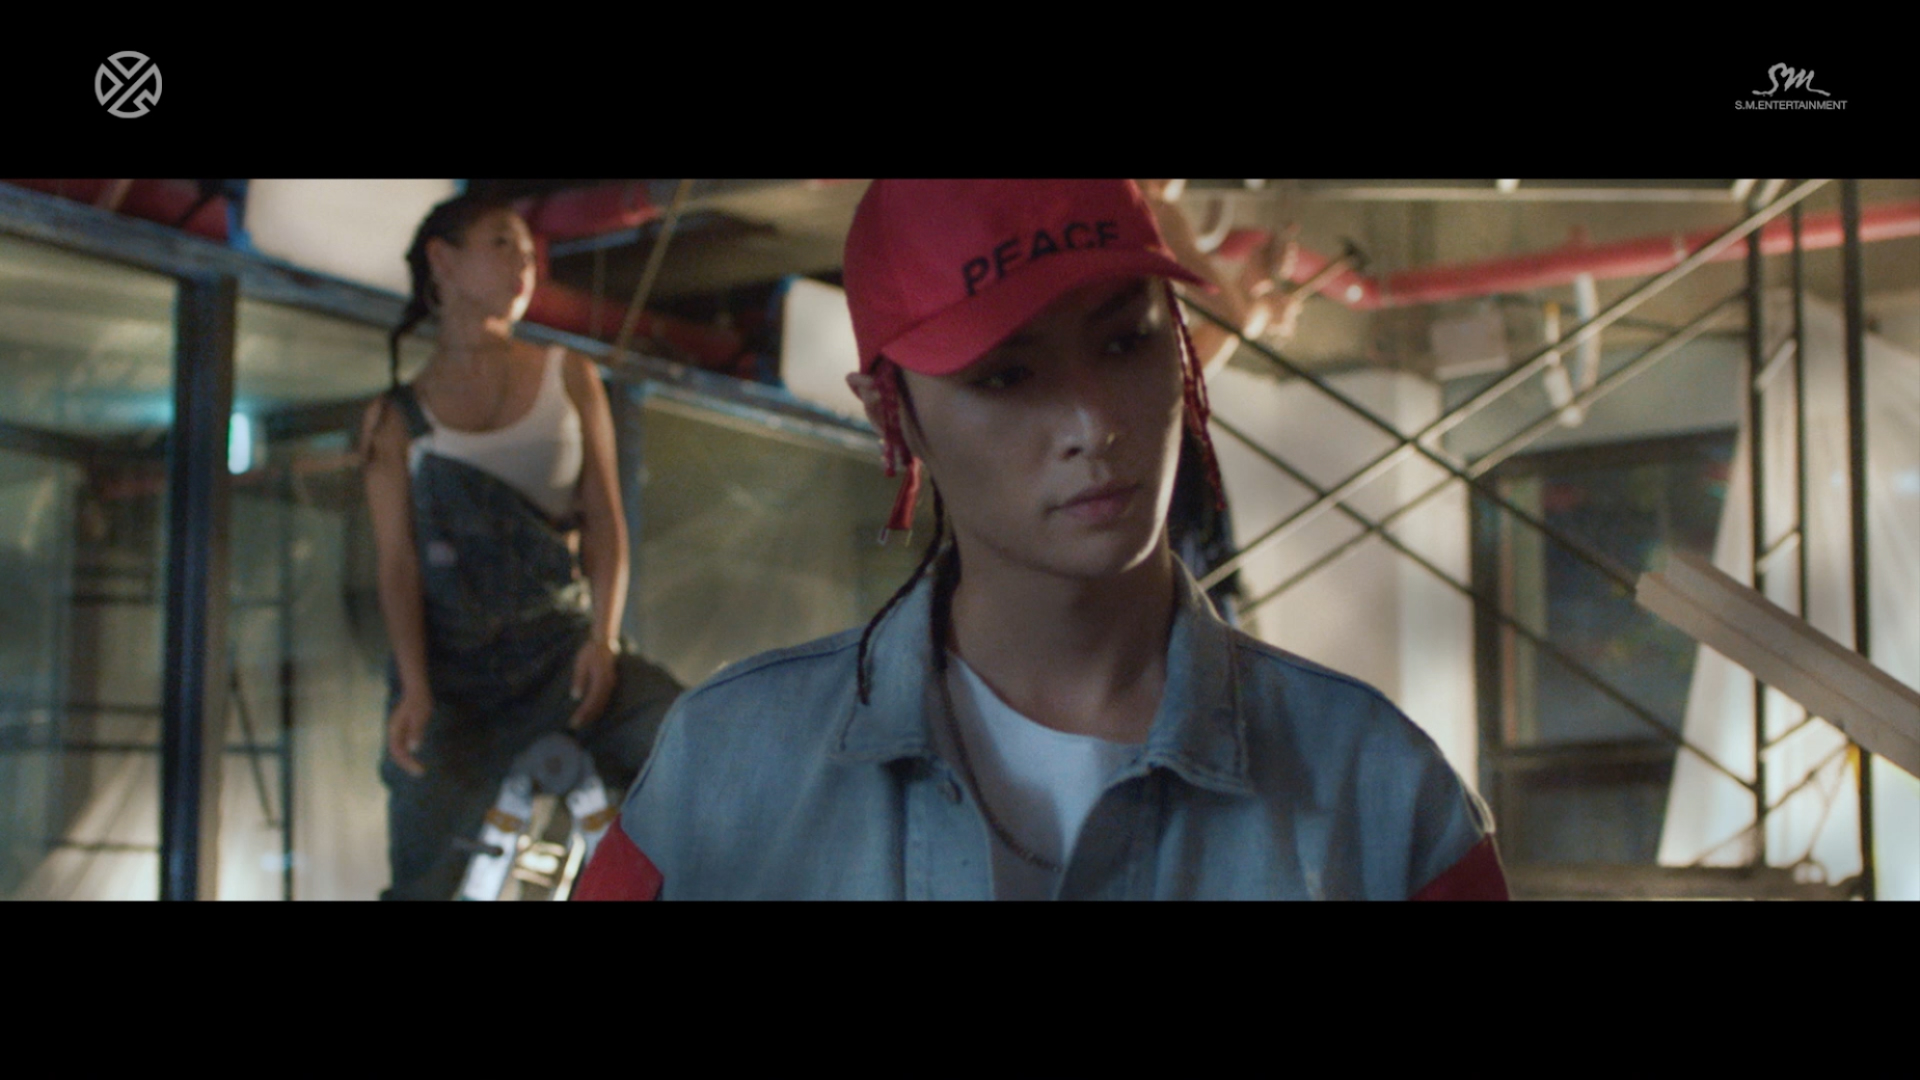 LAY 레이 'SHEEP (羊)' MV Teaser